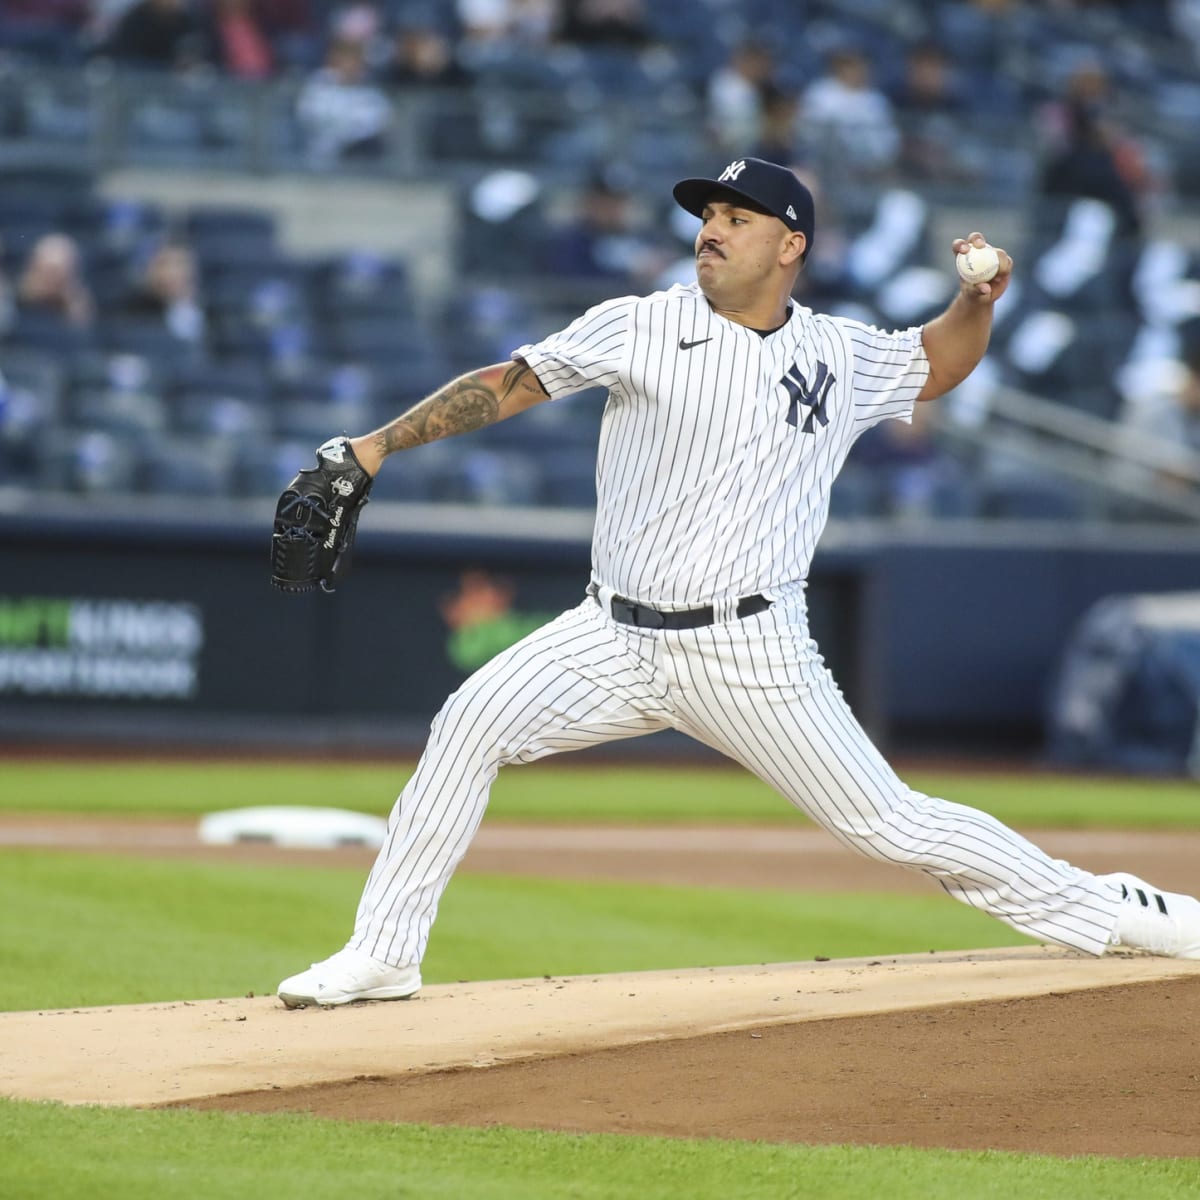 Noticing New York: Sports Culture Capper: Yankees, Professional